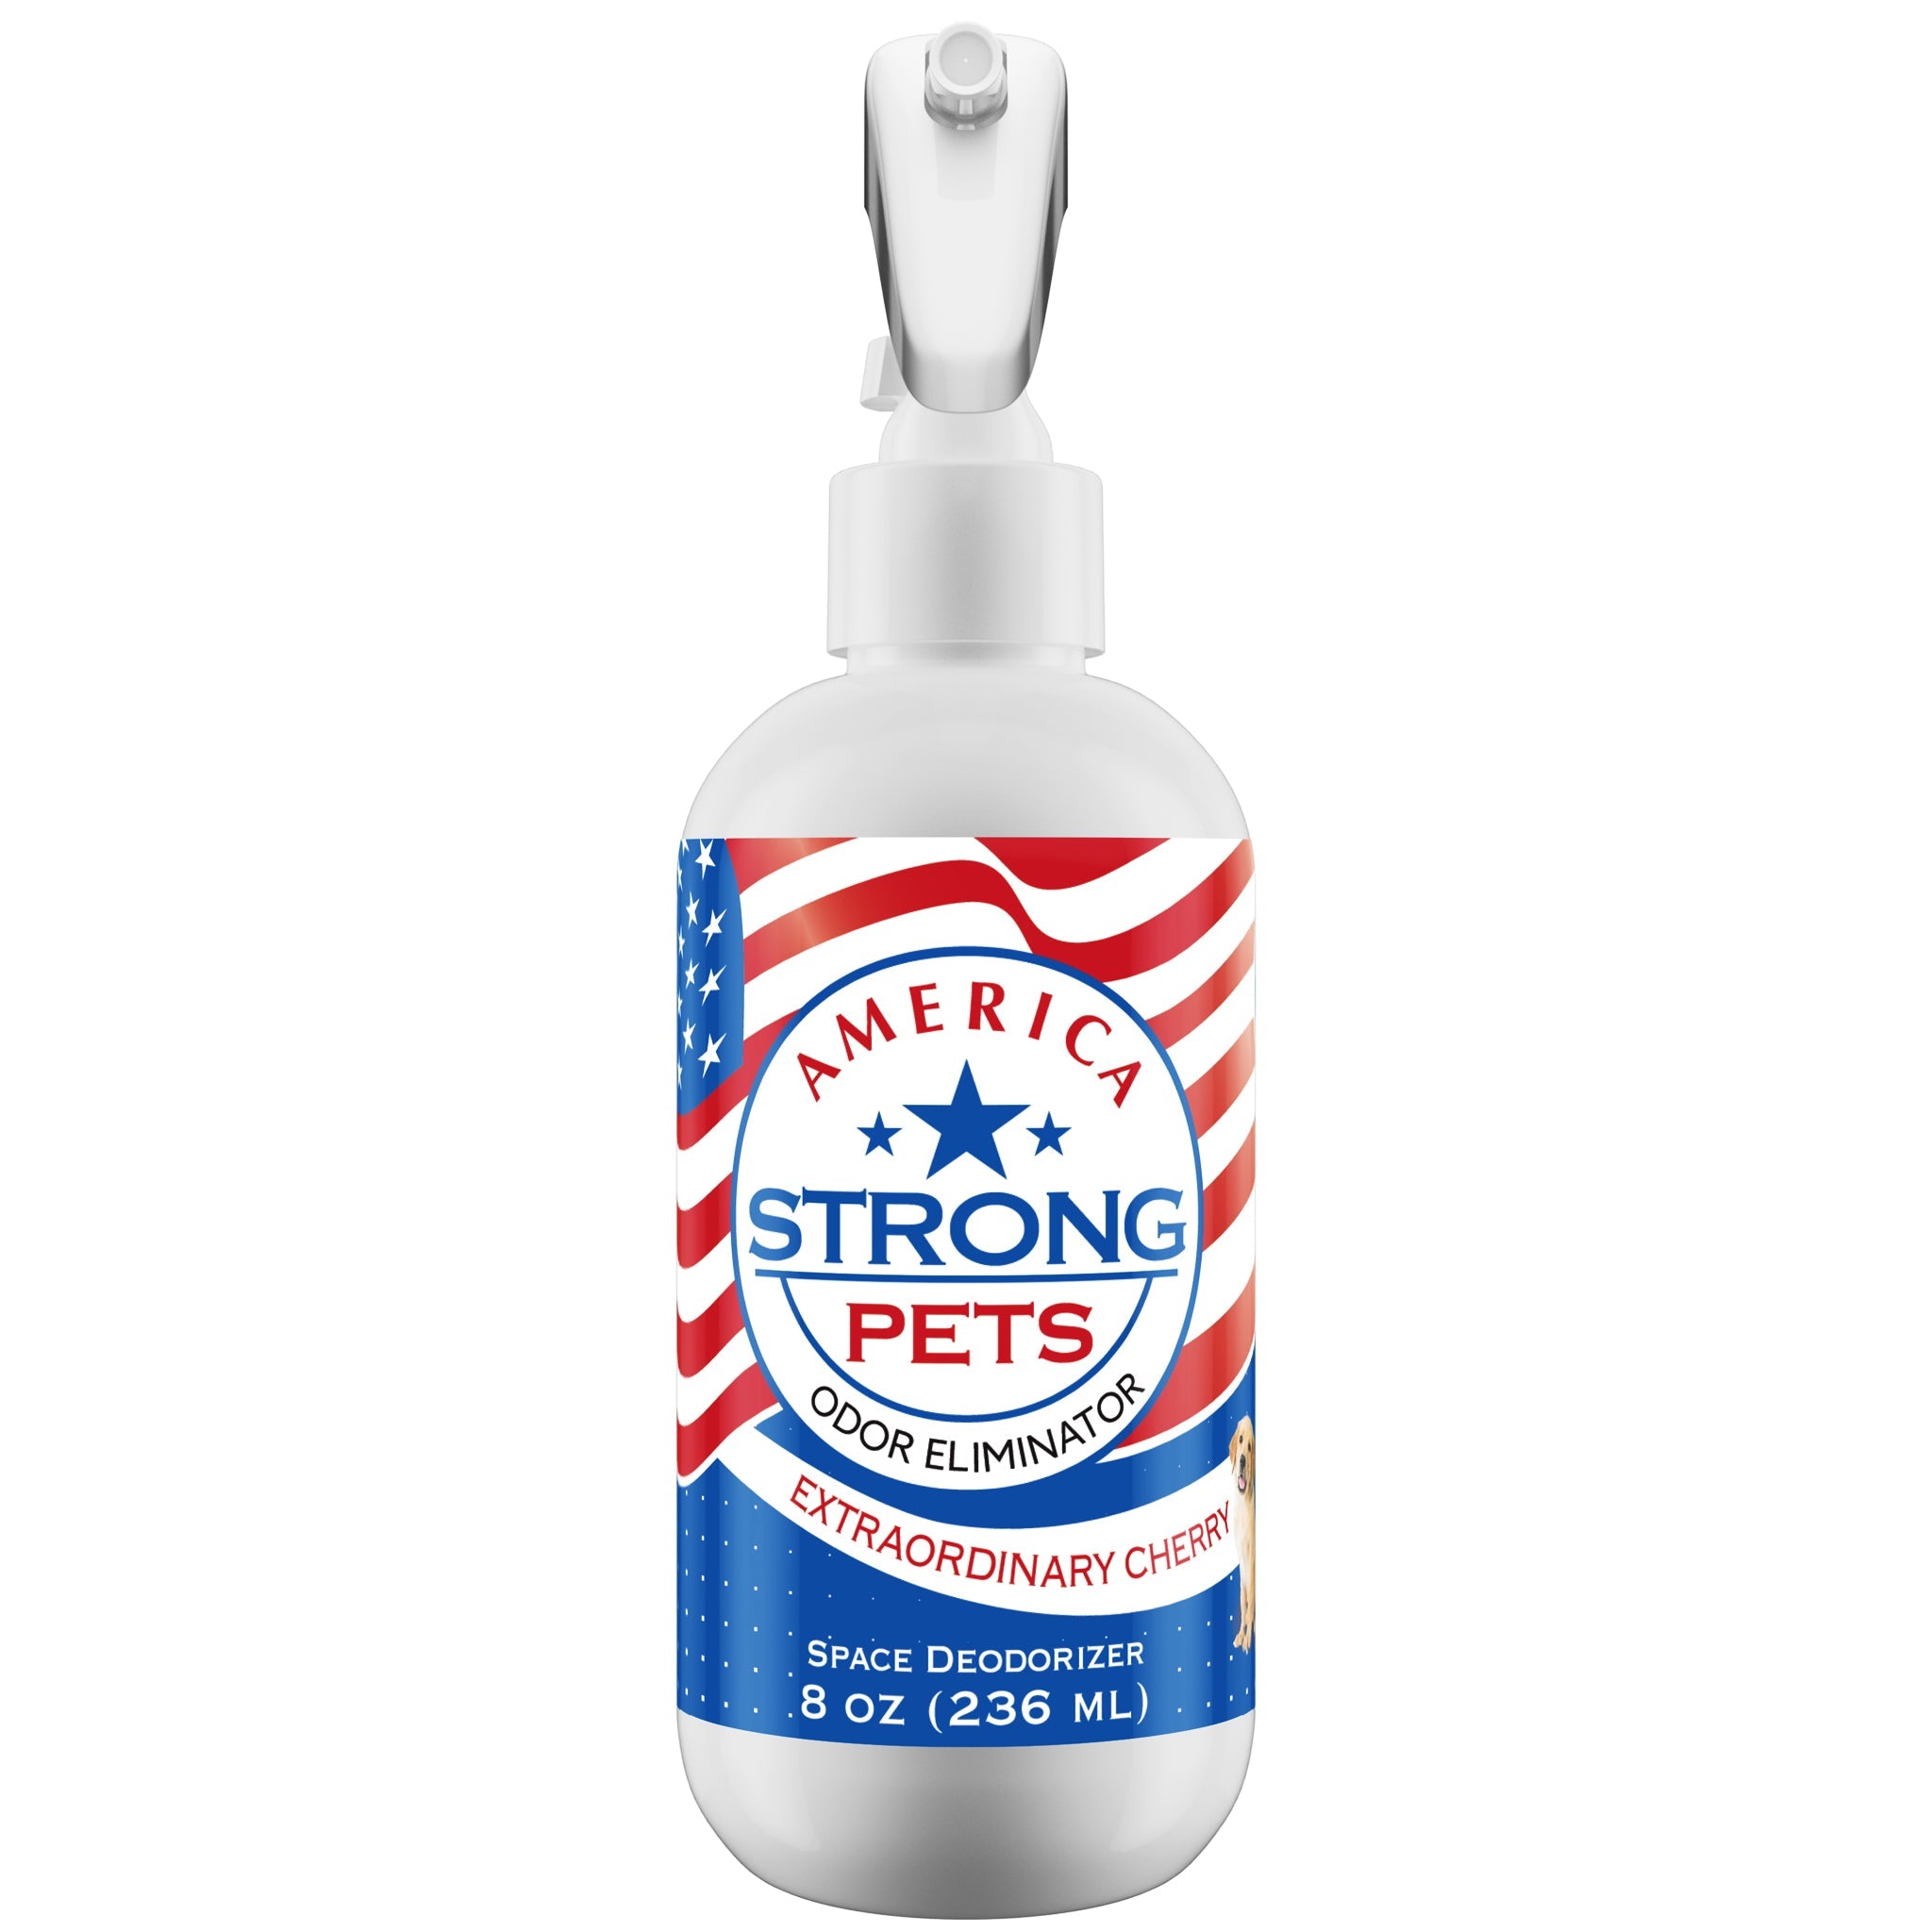 America Strong Pet Odor Eliminator - Extraordinary Cherry Scent Size: 8 fl oz